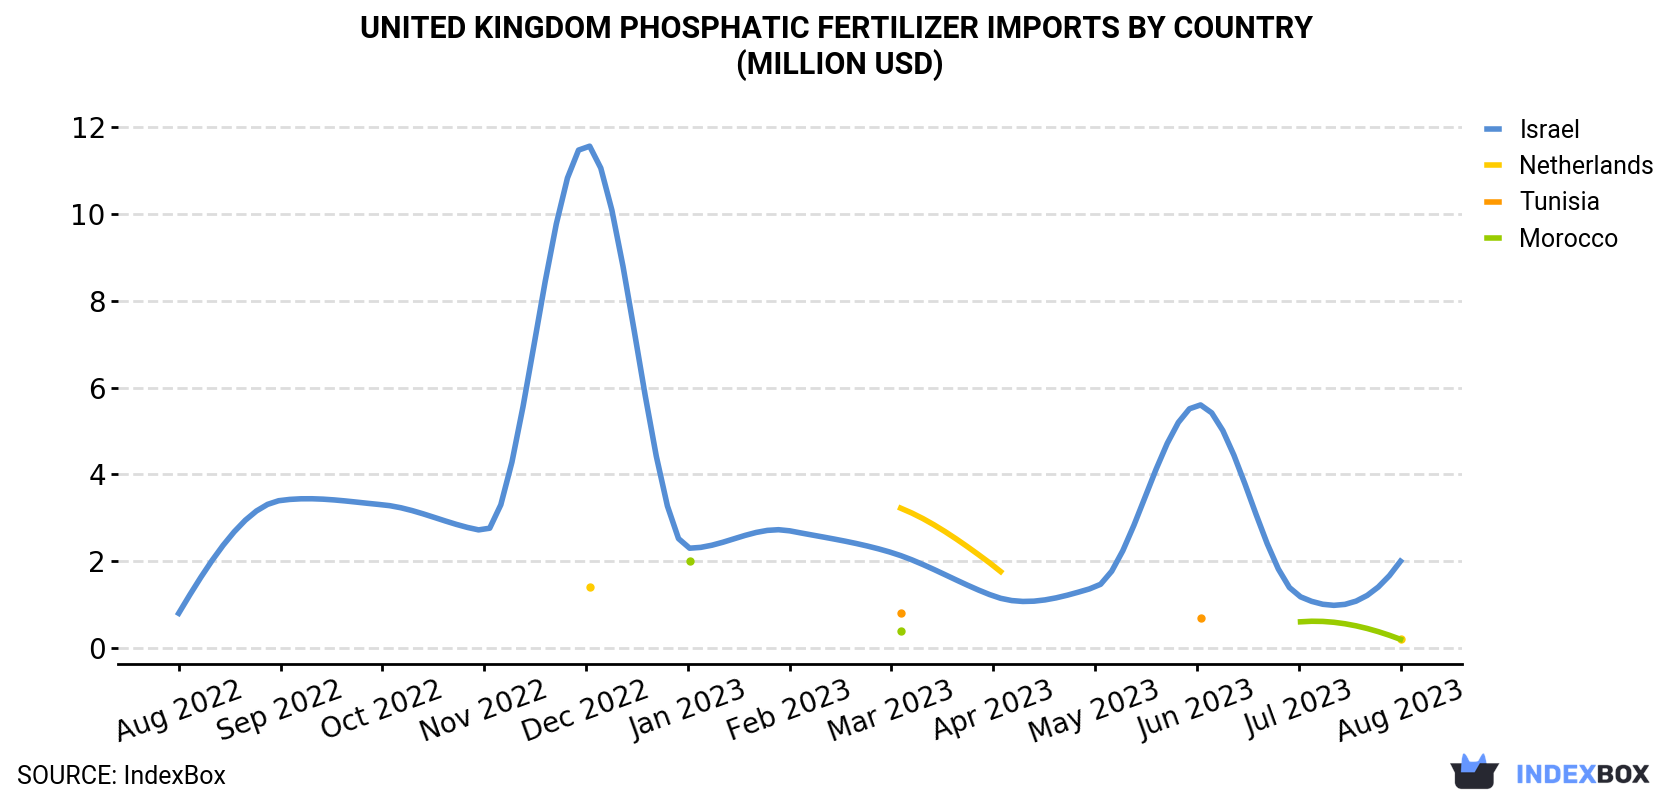 United Kingdom Phosphatic Fertilizer Imports By Country (Million USD)